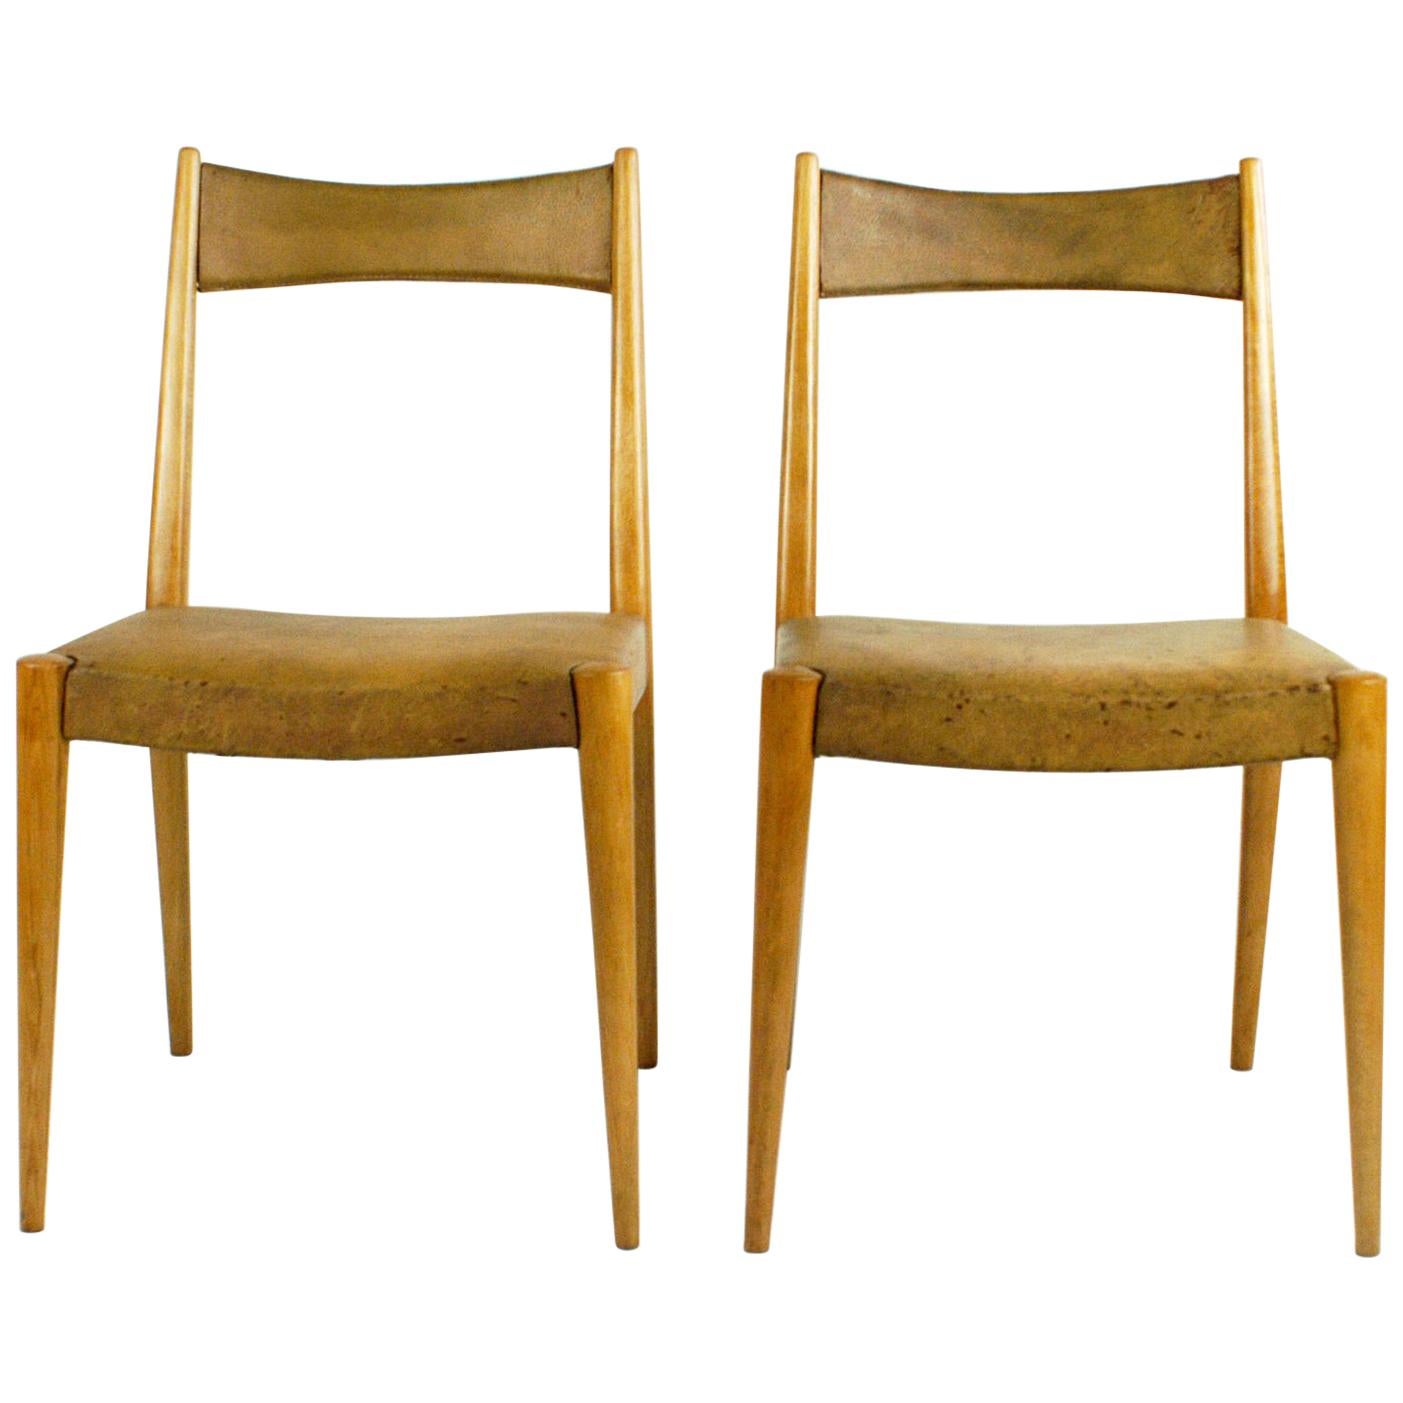 Pair of Austrian Midcentury Beech Dining Chairs by Anna Lülja Praun